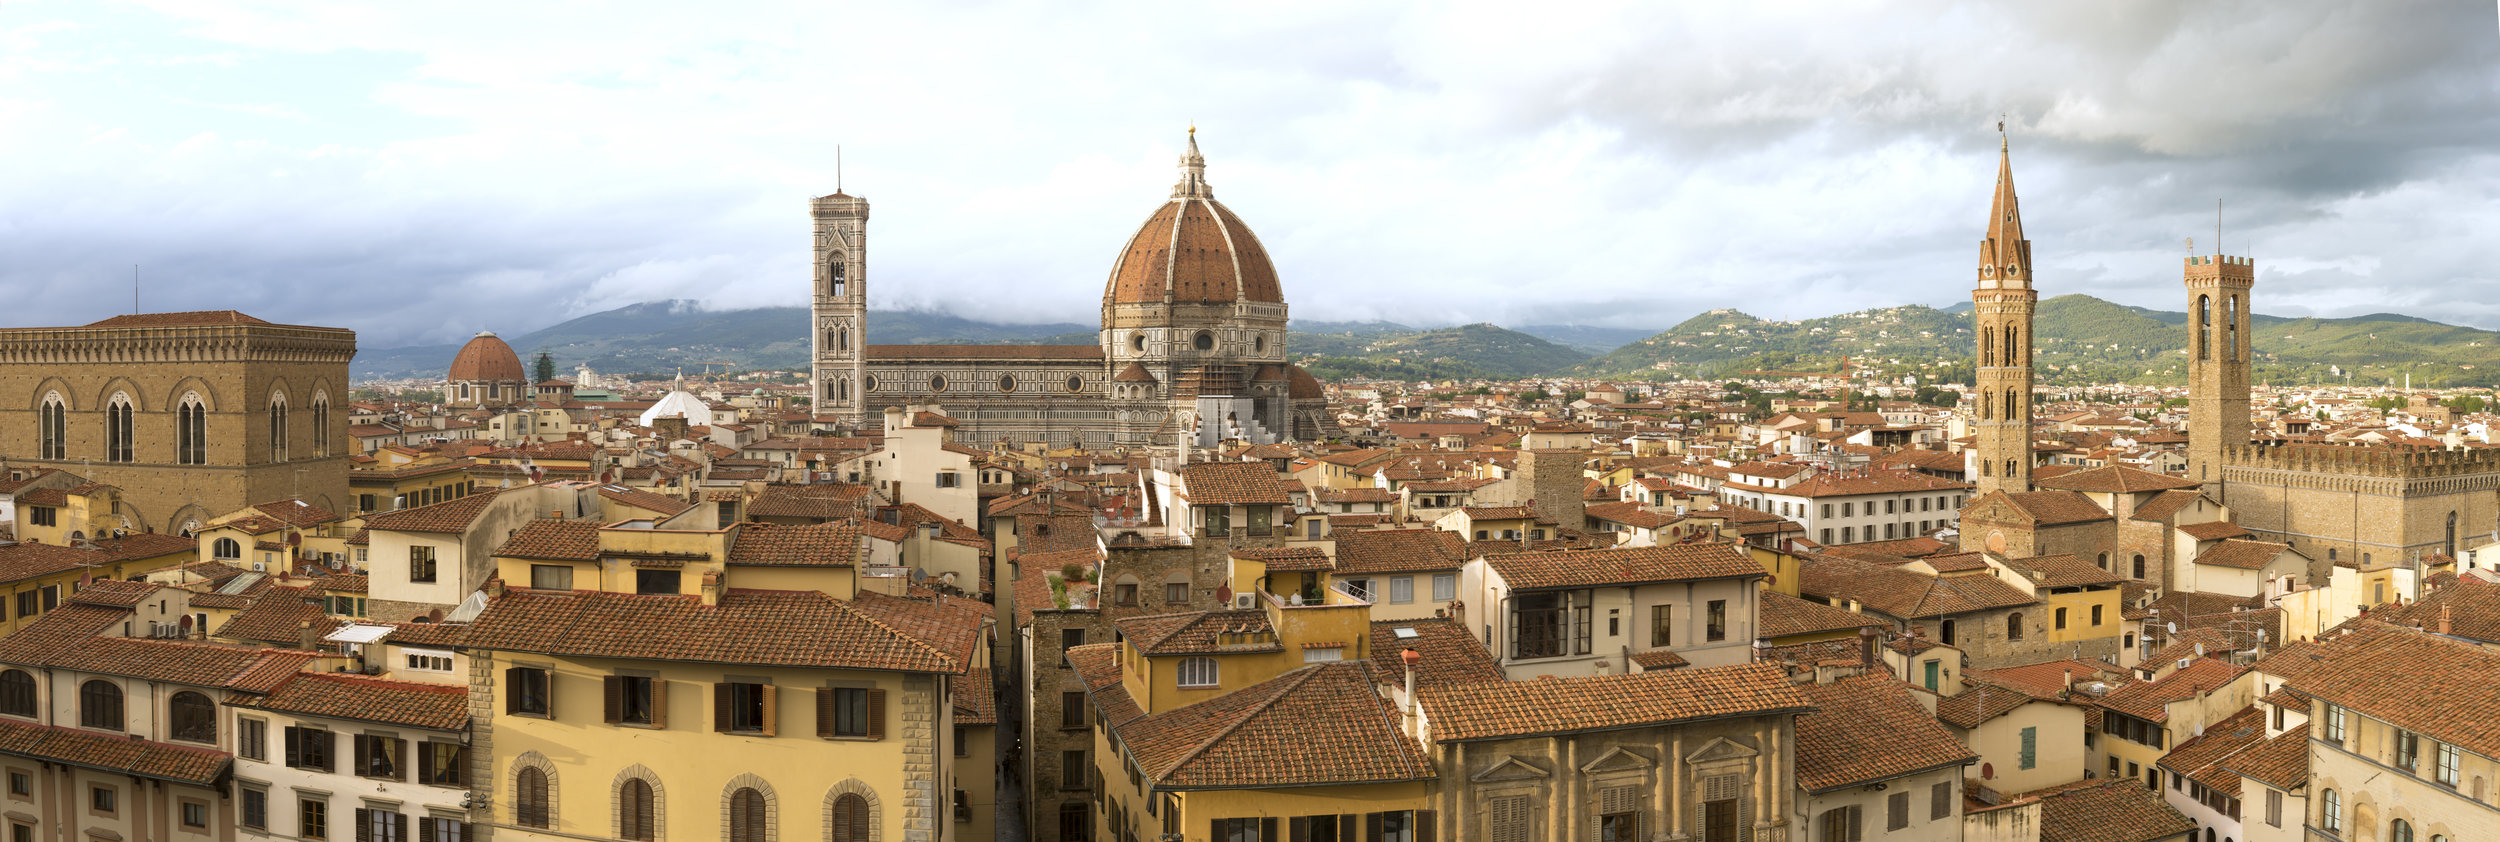 Panorama_Florence_Med.jpg